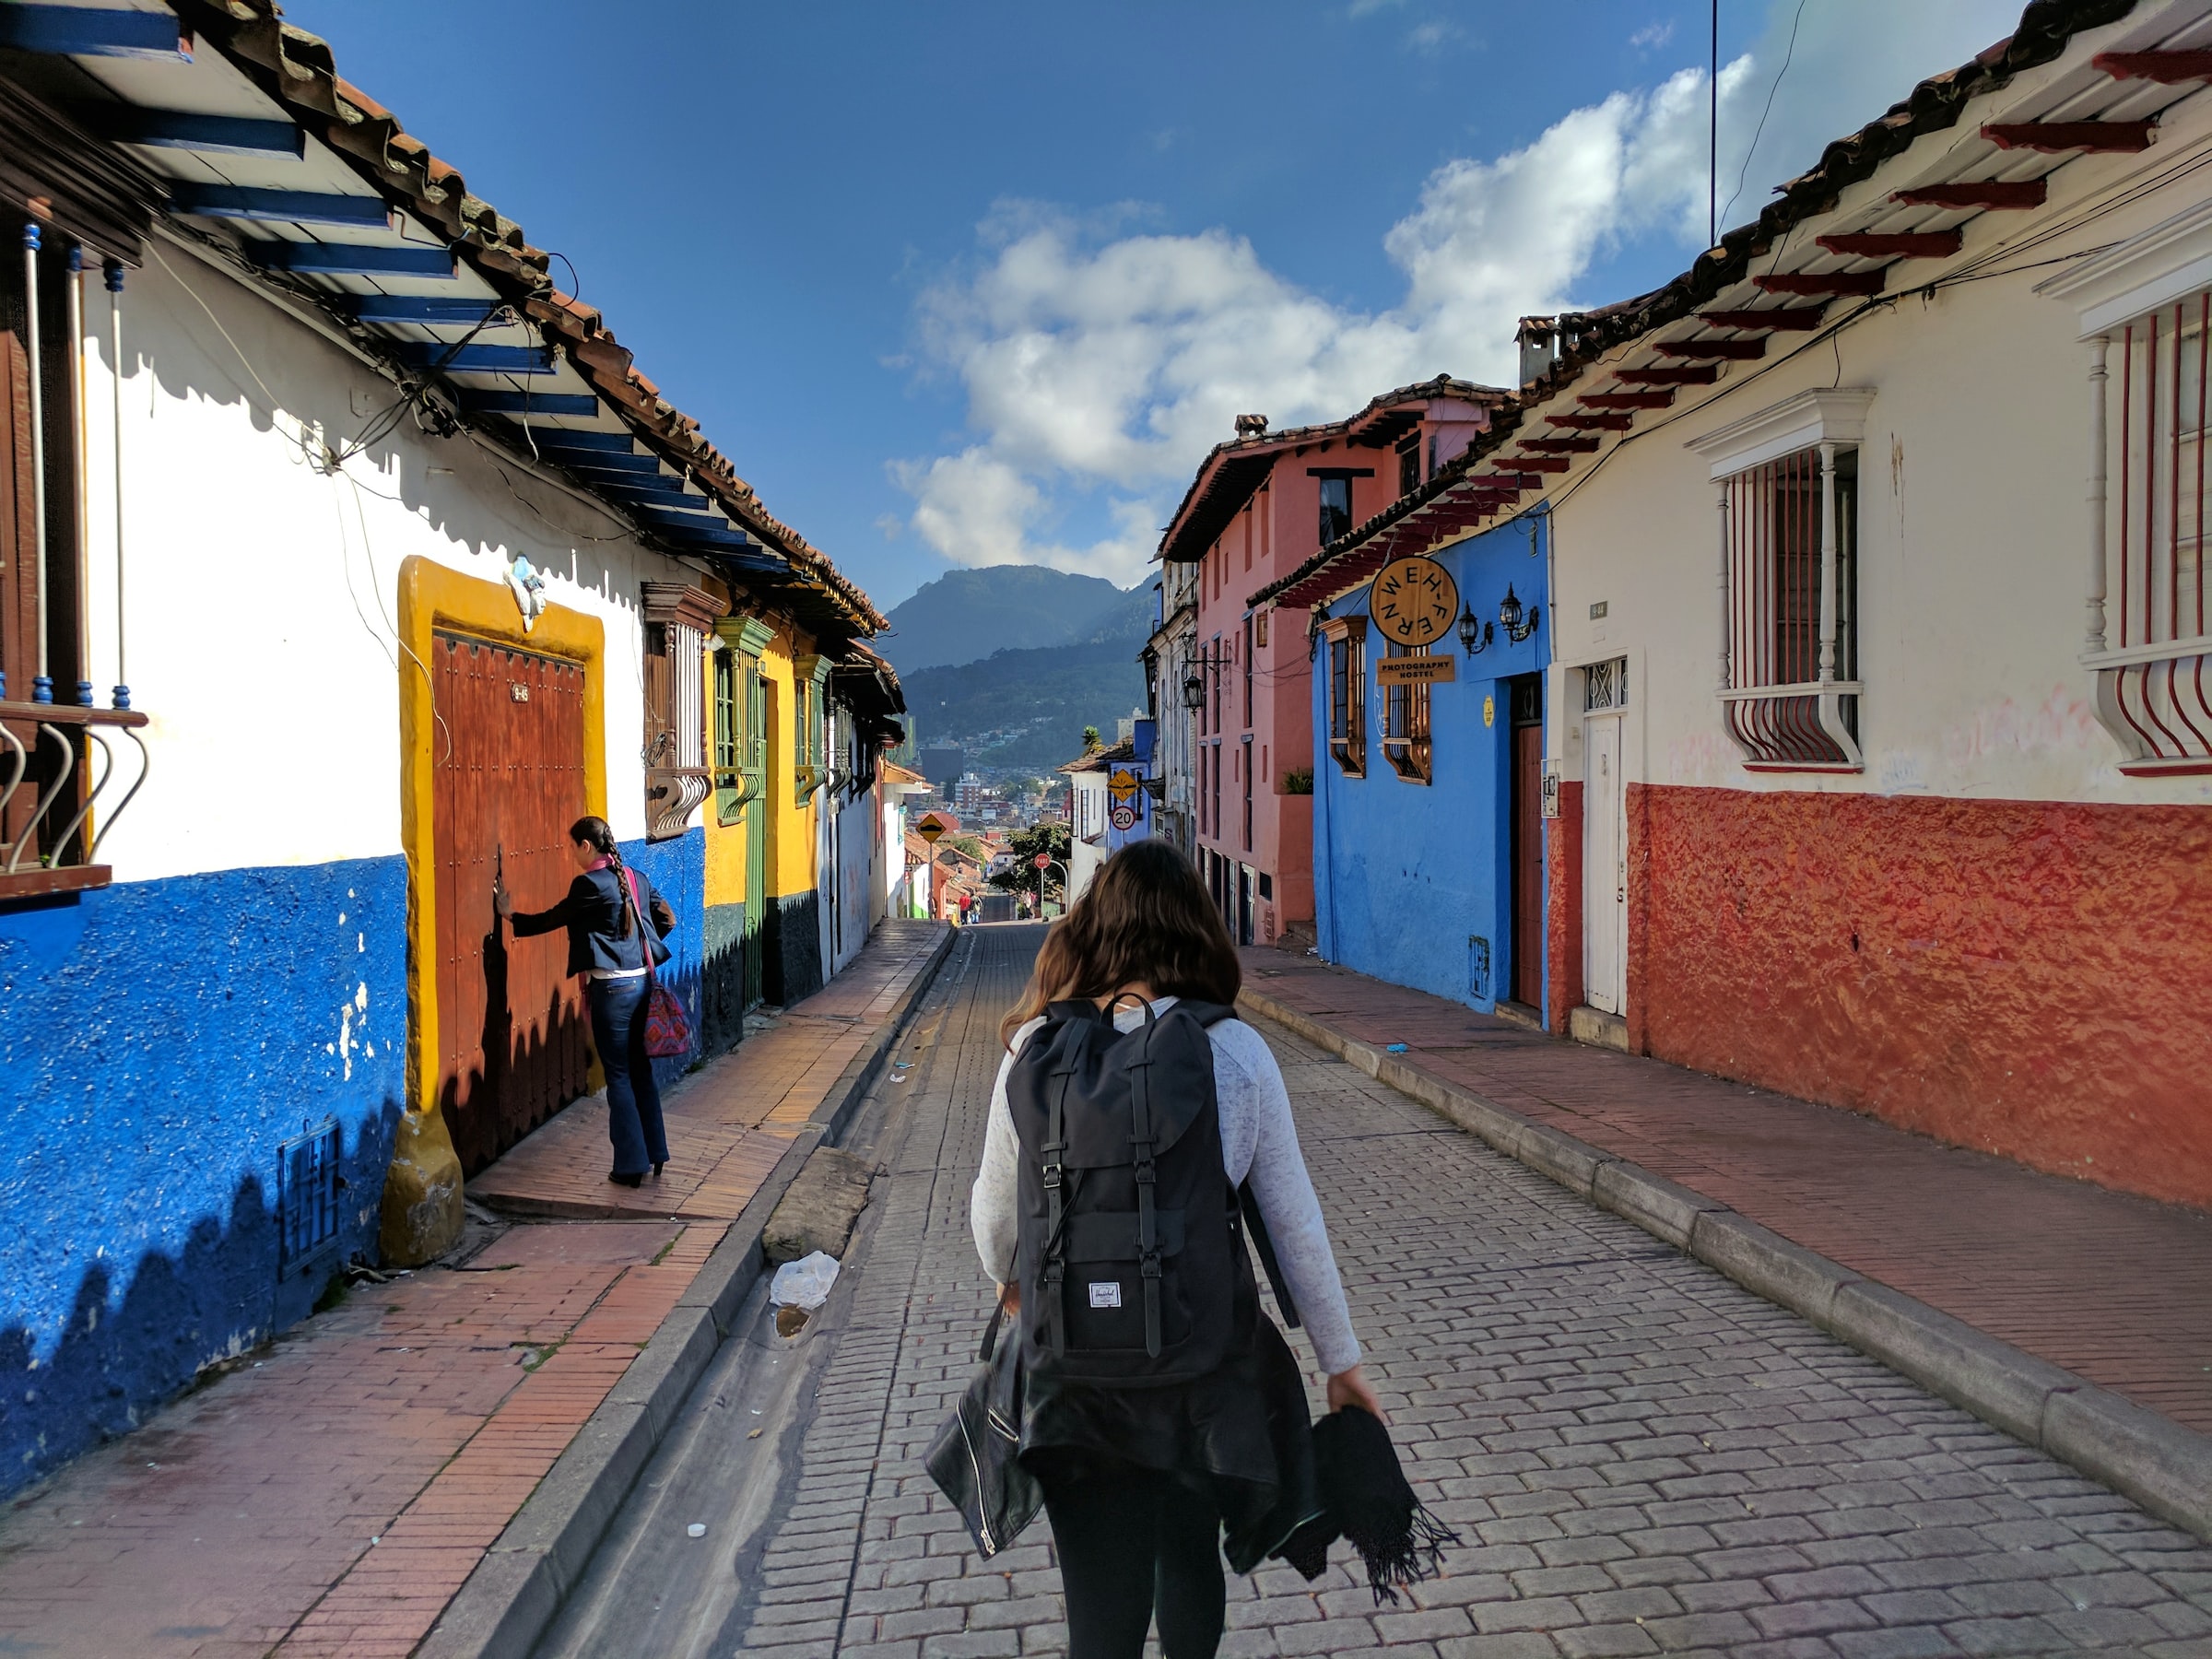 Tourist Visas: How to Extend a Tourist Visa in Medellín – 2023 Update